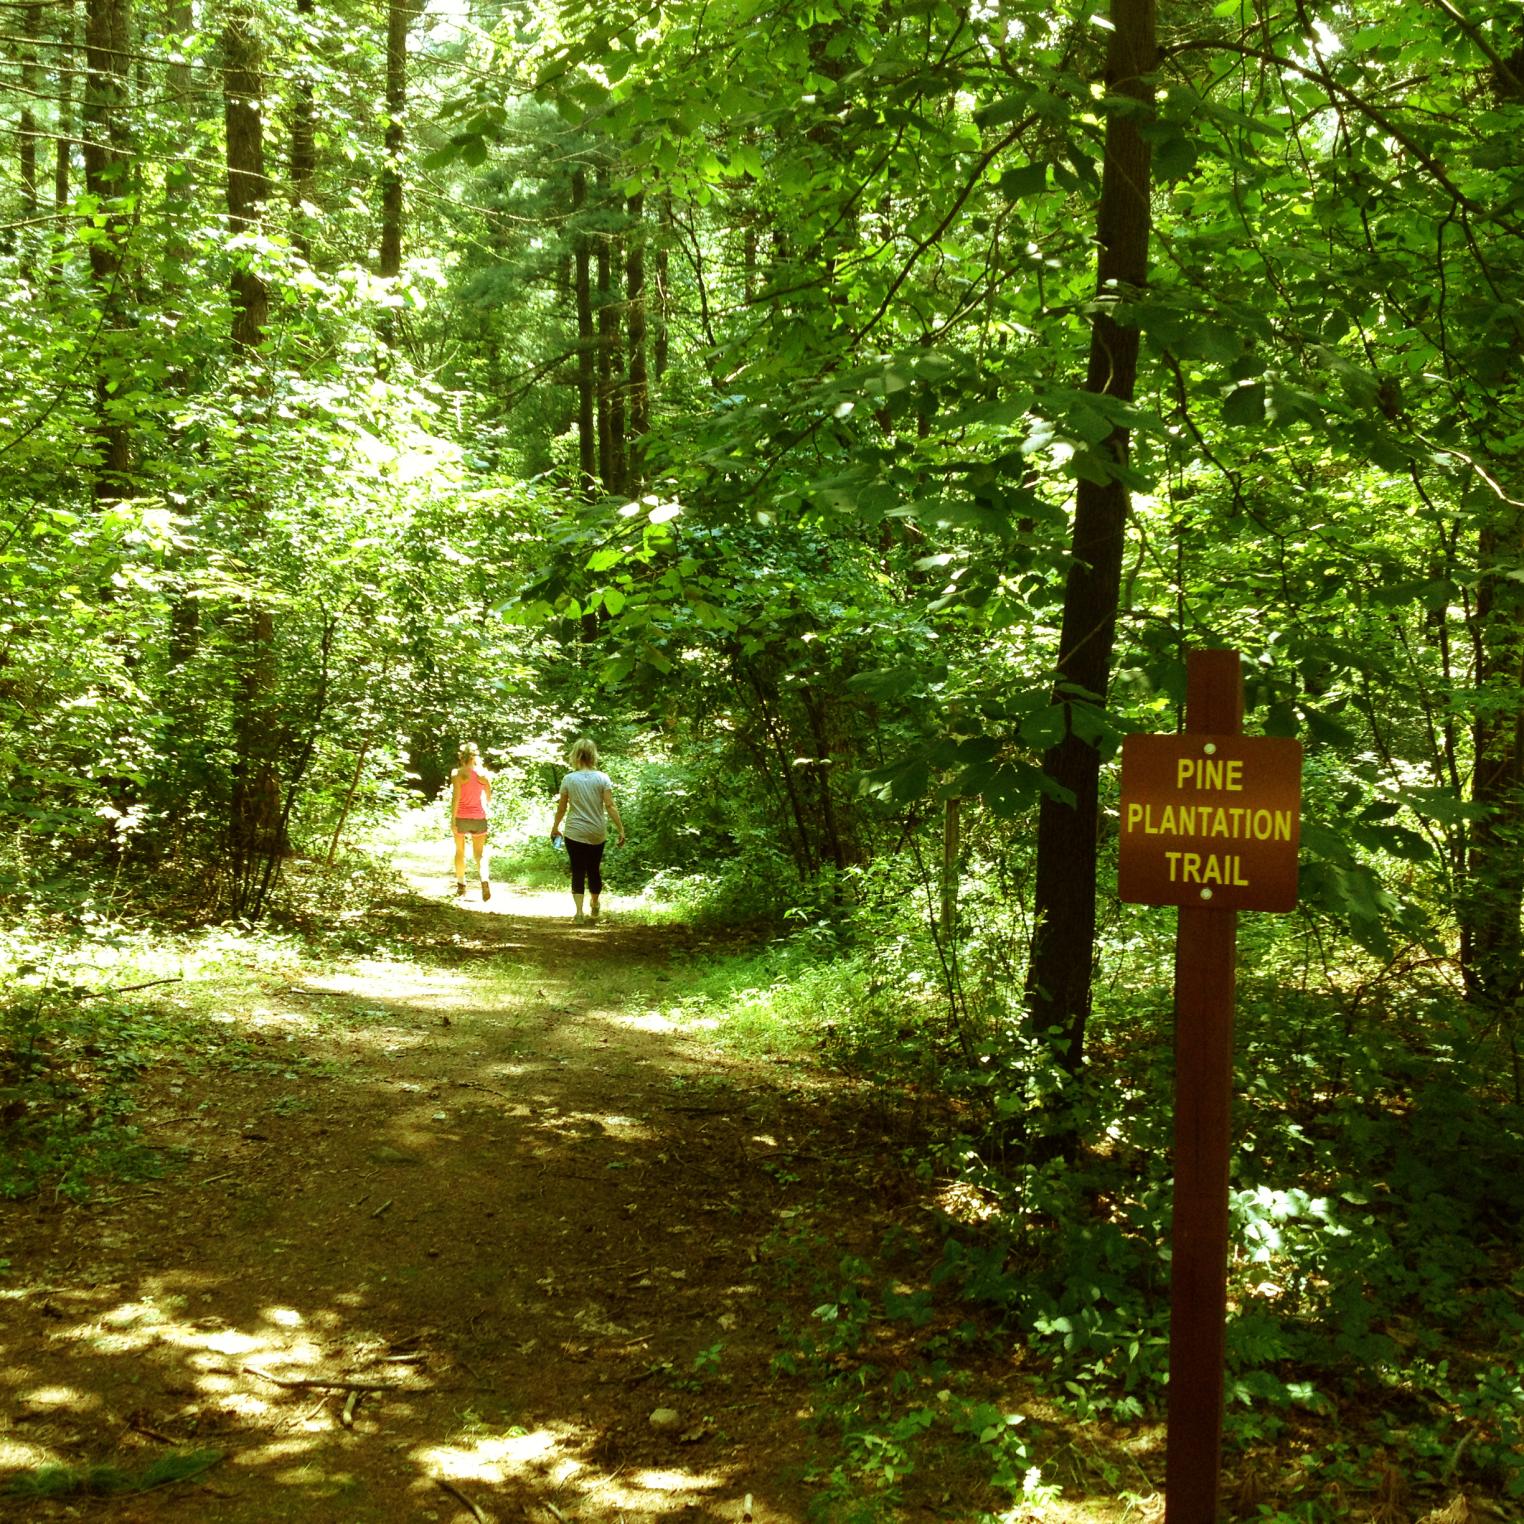 Pine Plantation Trail at Kings Gap